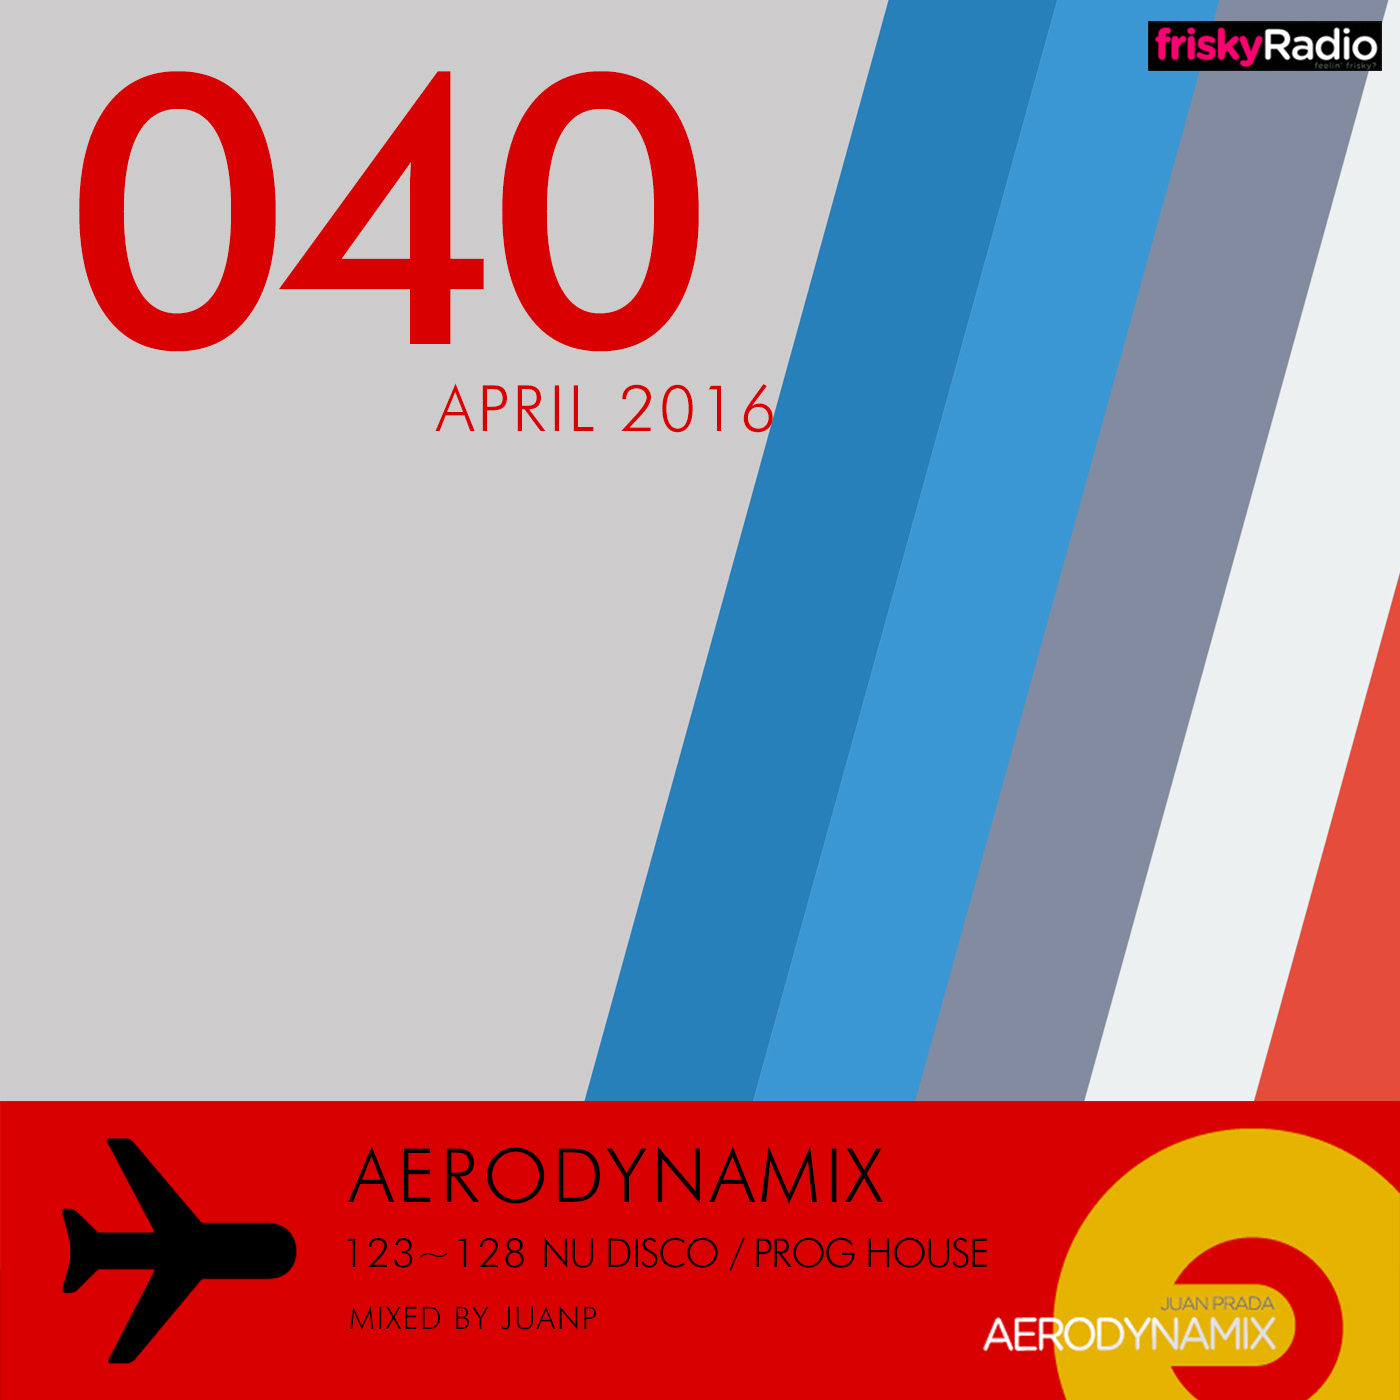 Aerodynamix 040 @ Frisky Radio April 2016 mixed by JuanP